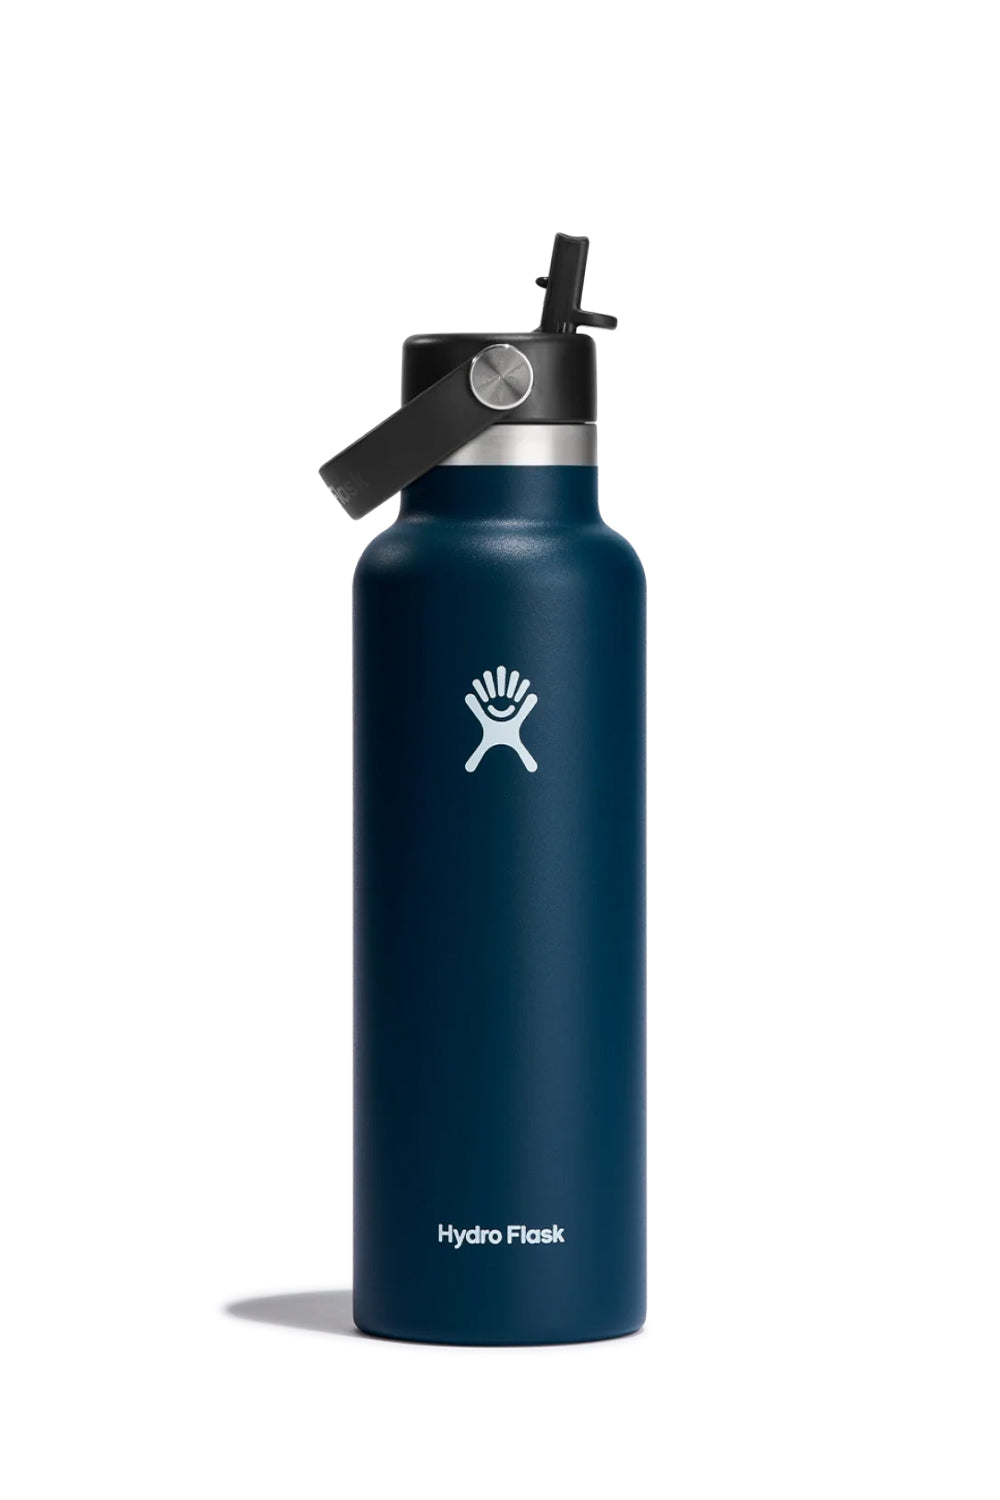 Hydro Flask 21oz (621ml) Standard Mouth Bottle with Flex Straw Cap